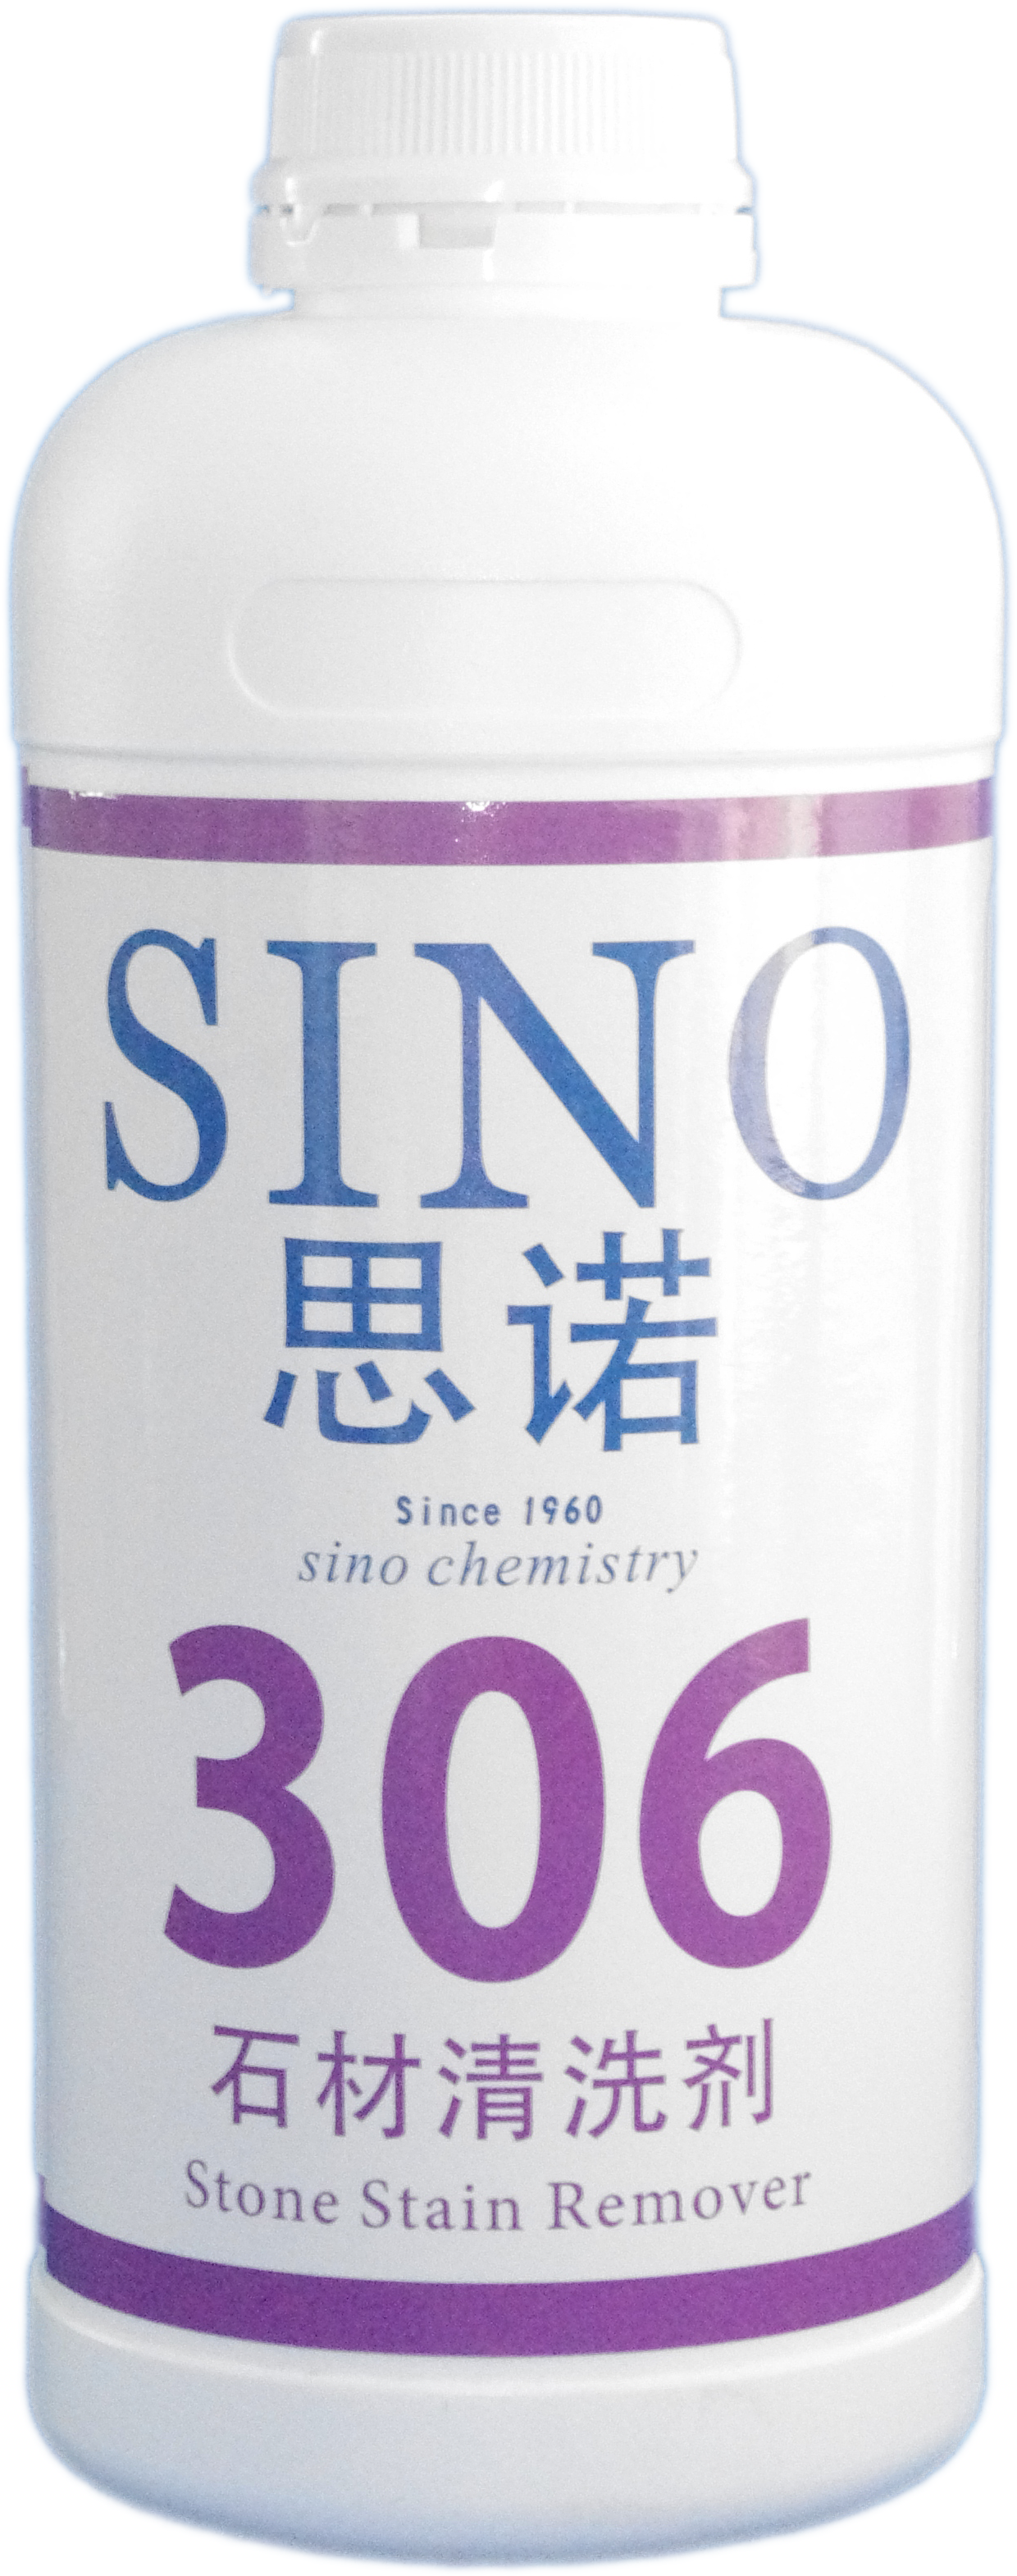 思诺石材清洗剂SINO-306